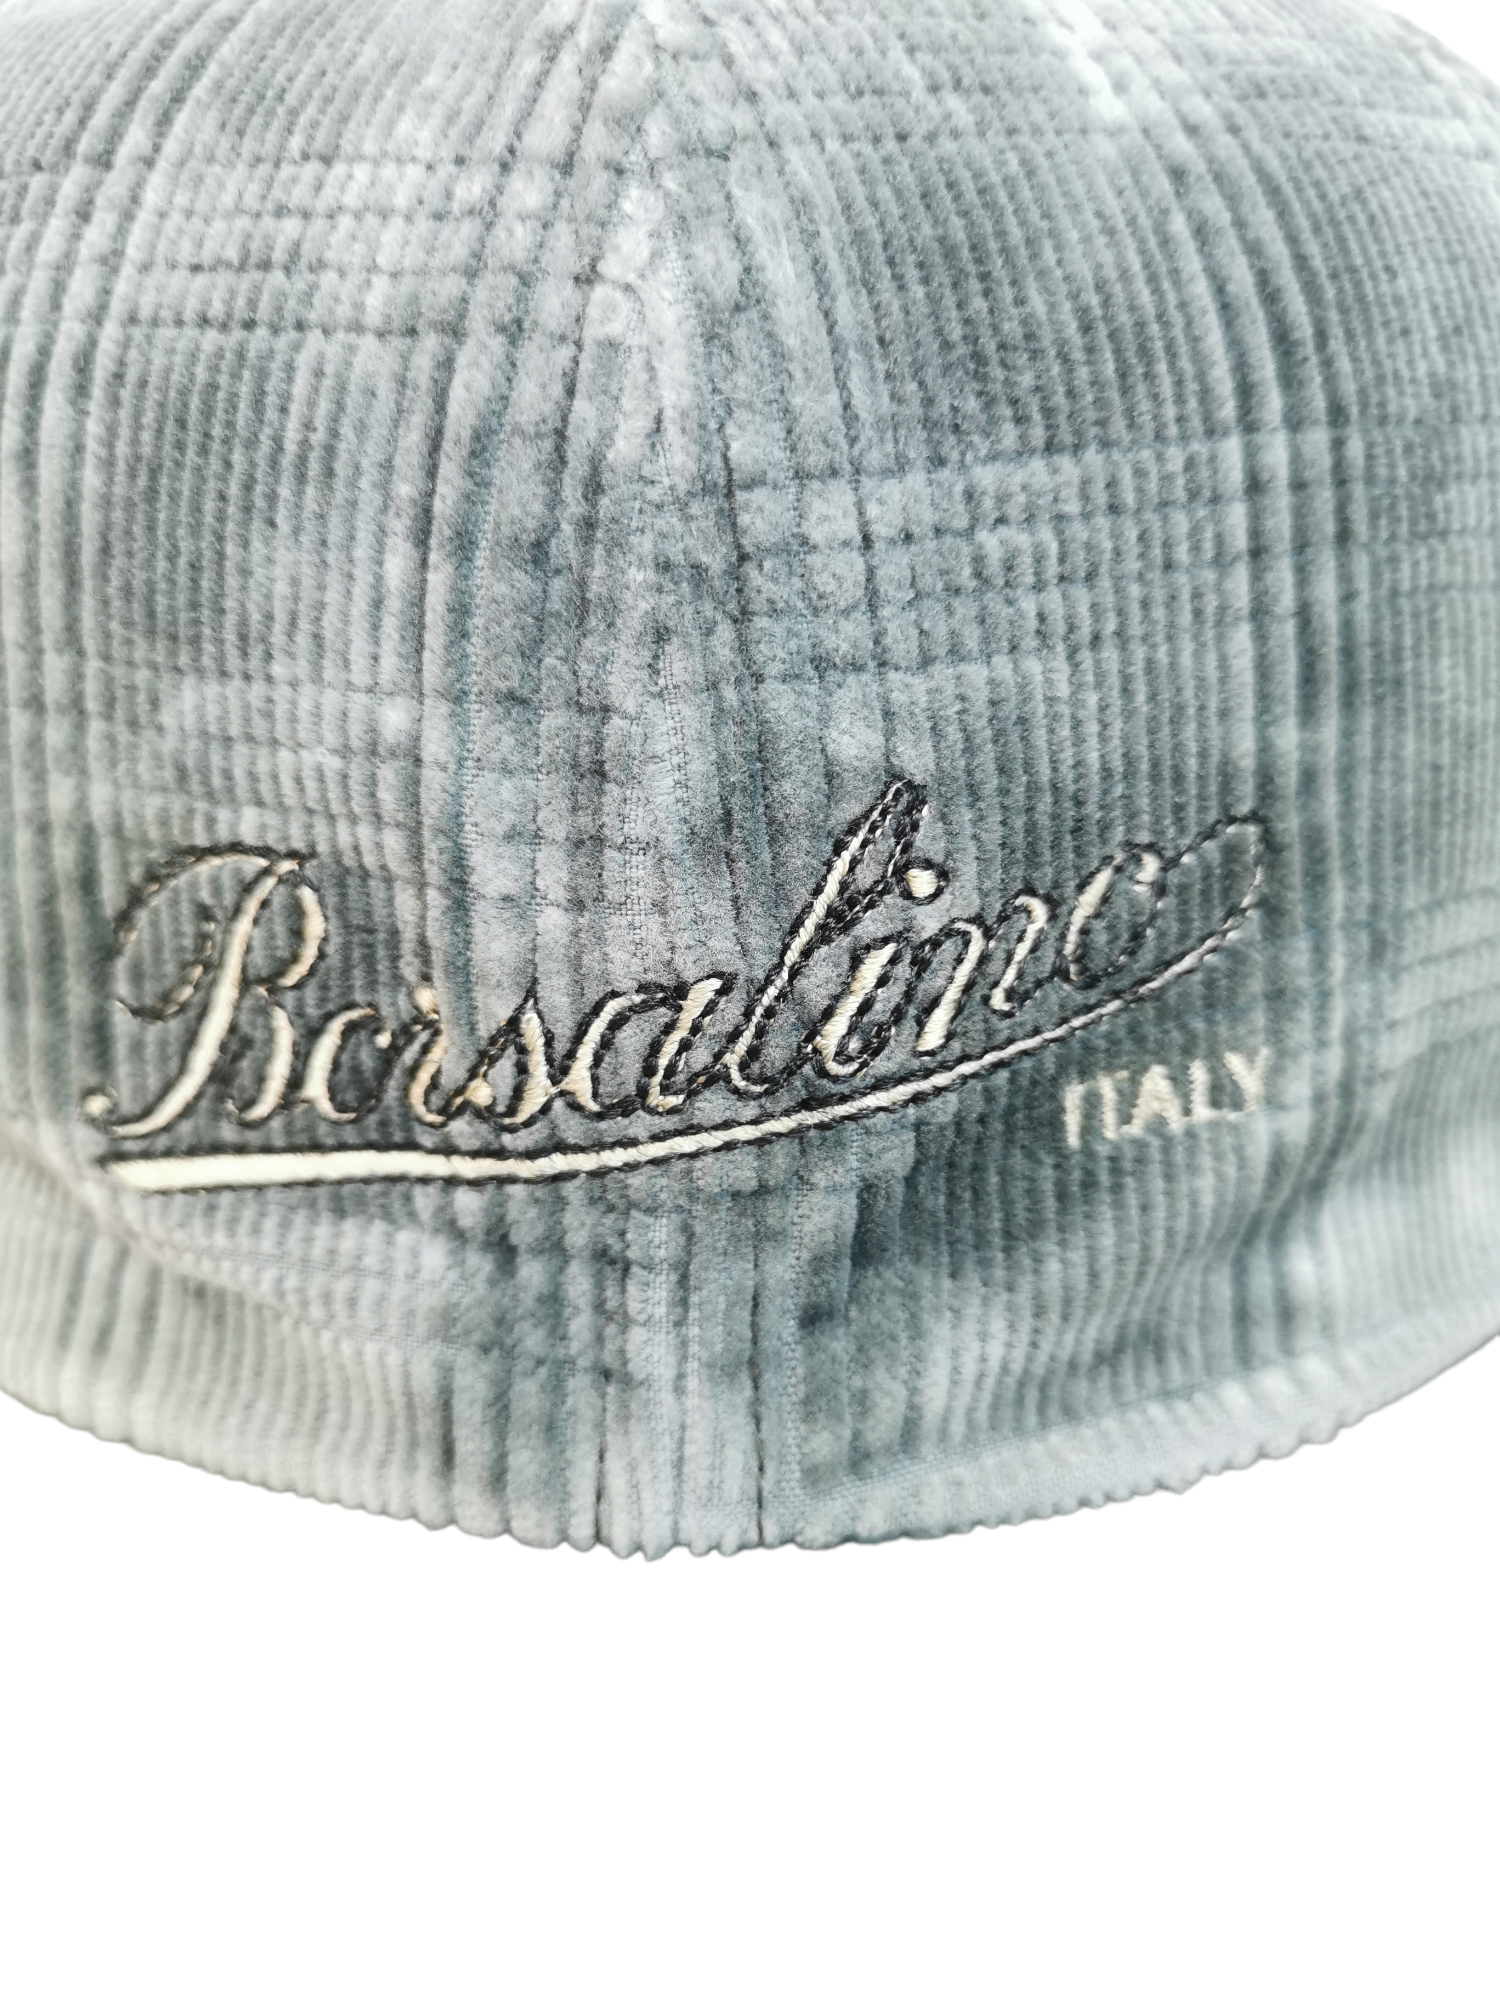 Borsalino - VINTAGE BORSALINO LUXURY DESIGNER HAT CAP - 2